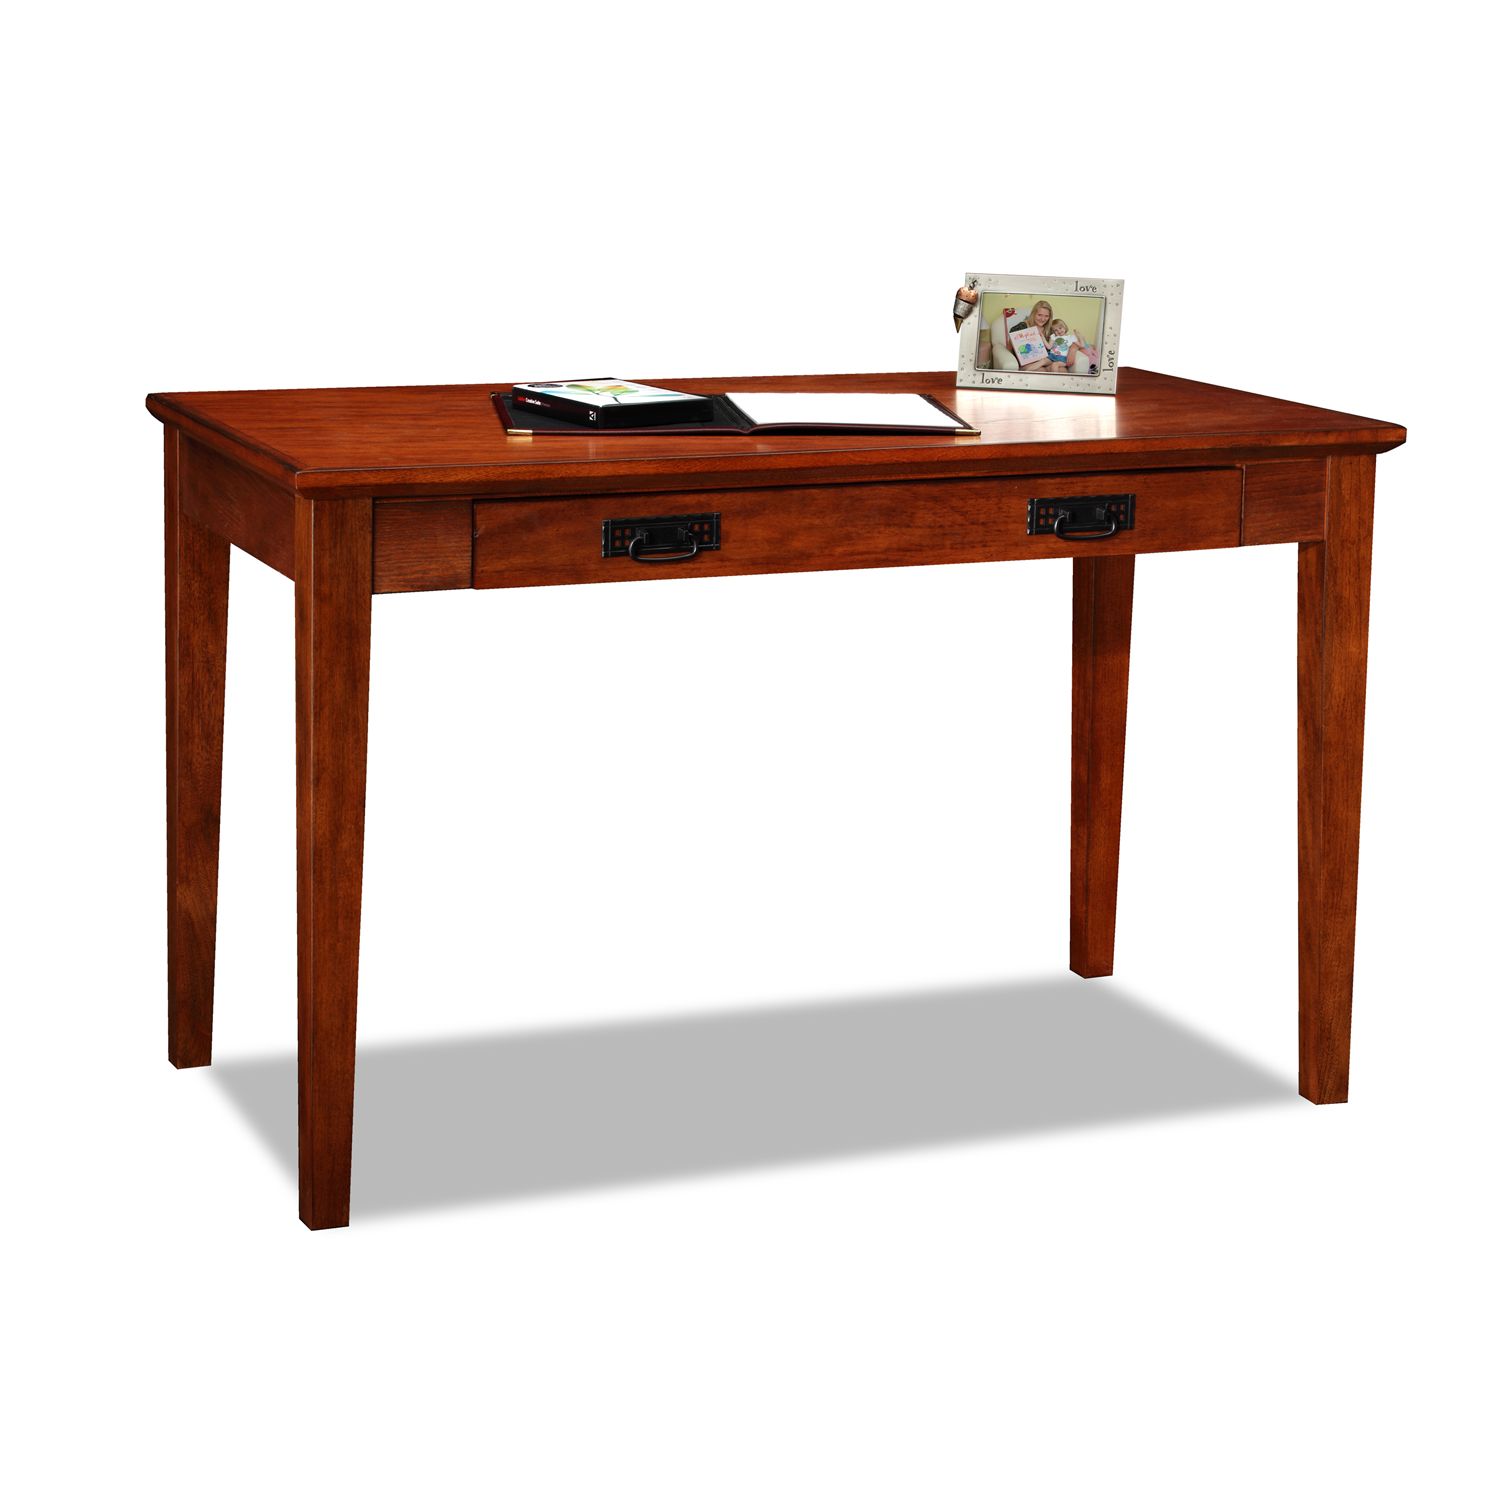 Image for Leick Furniture Mission Desk at Kohl's.